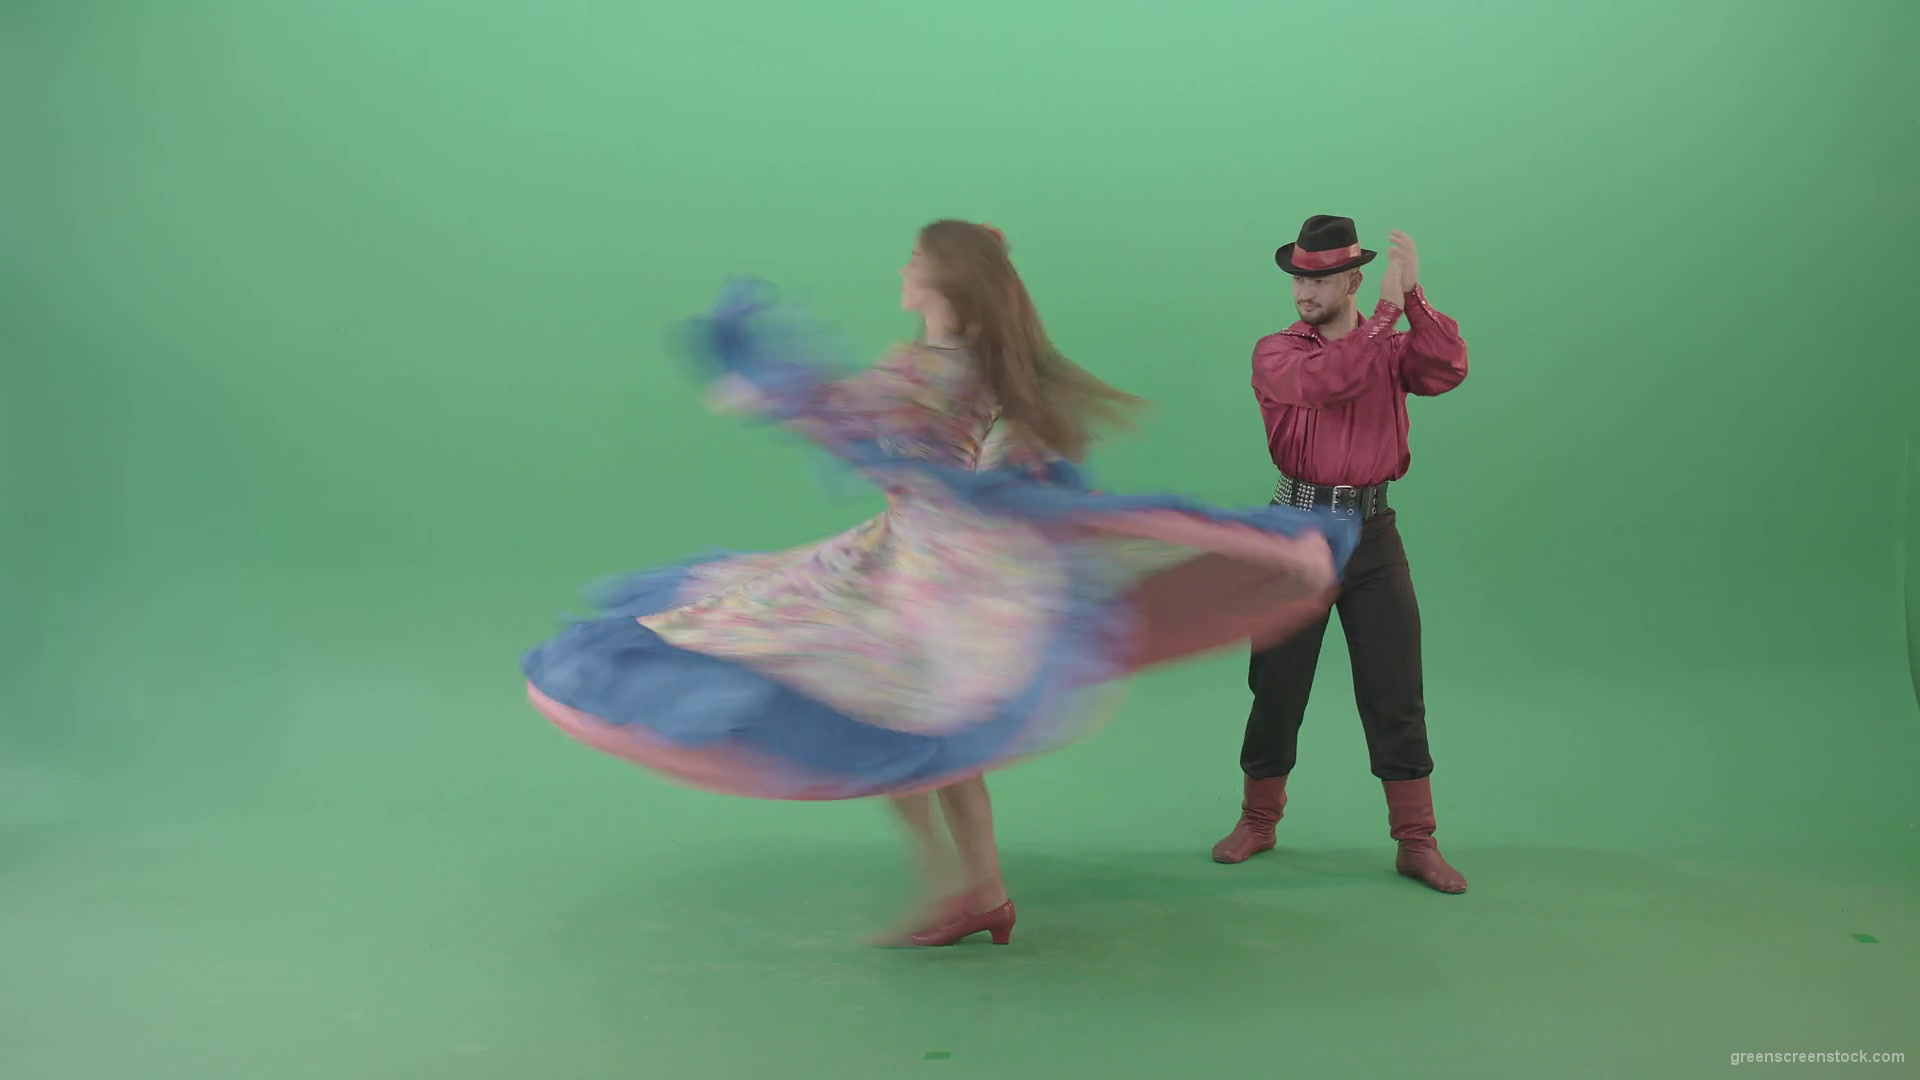 Balkan-couple-dance-hot-folk-dance-in-gypsy-comstumes-in-green-screen-studio-4K-Video-Footage-1920_004 Green Screen Stock